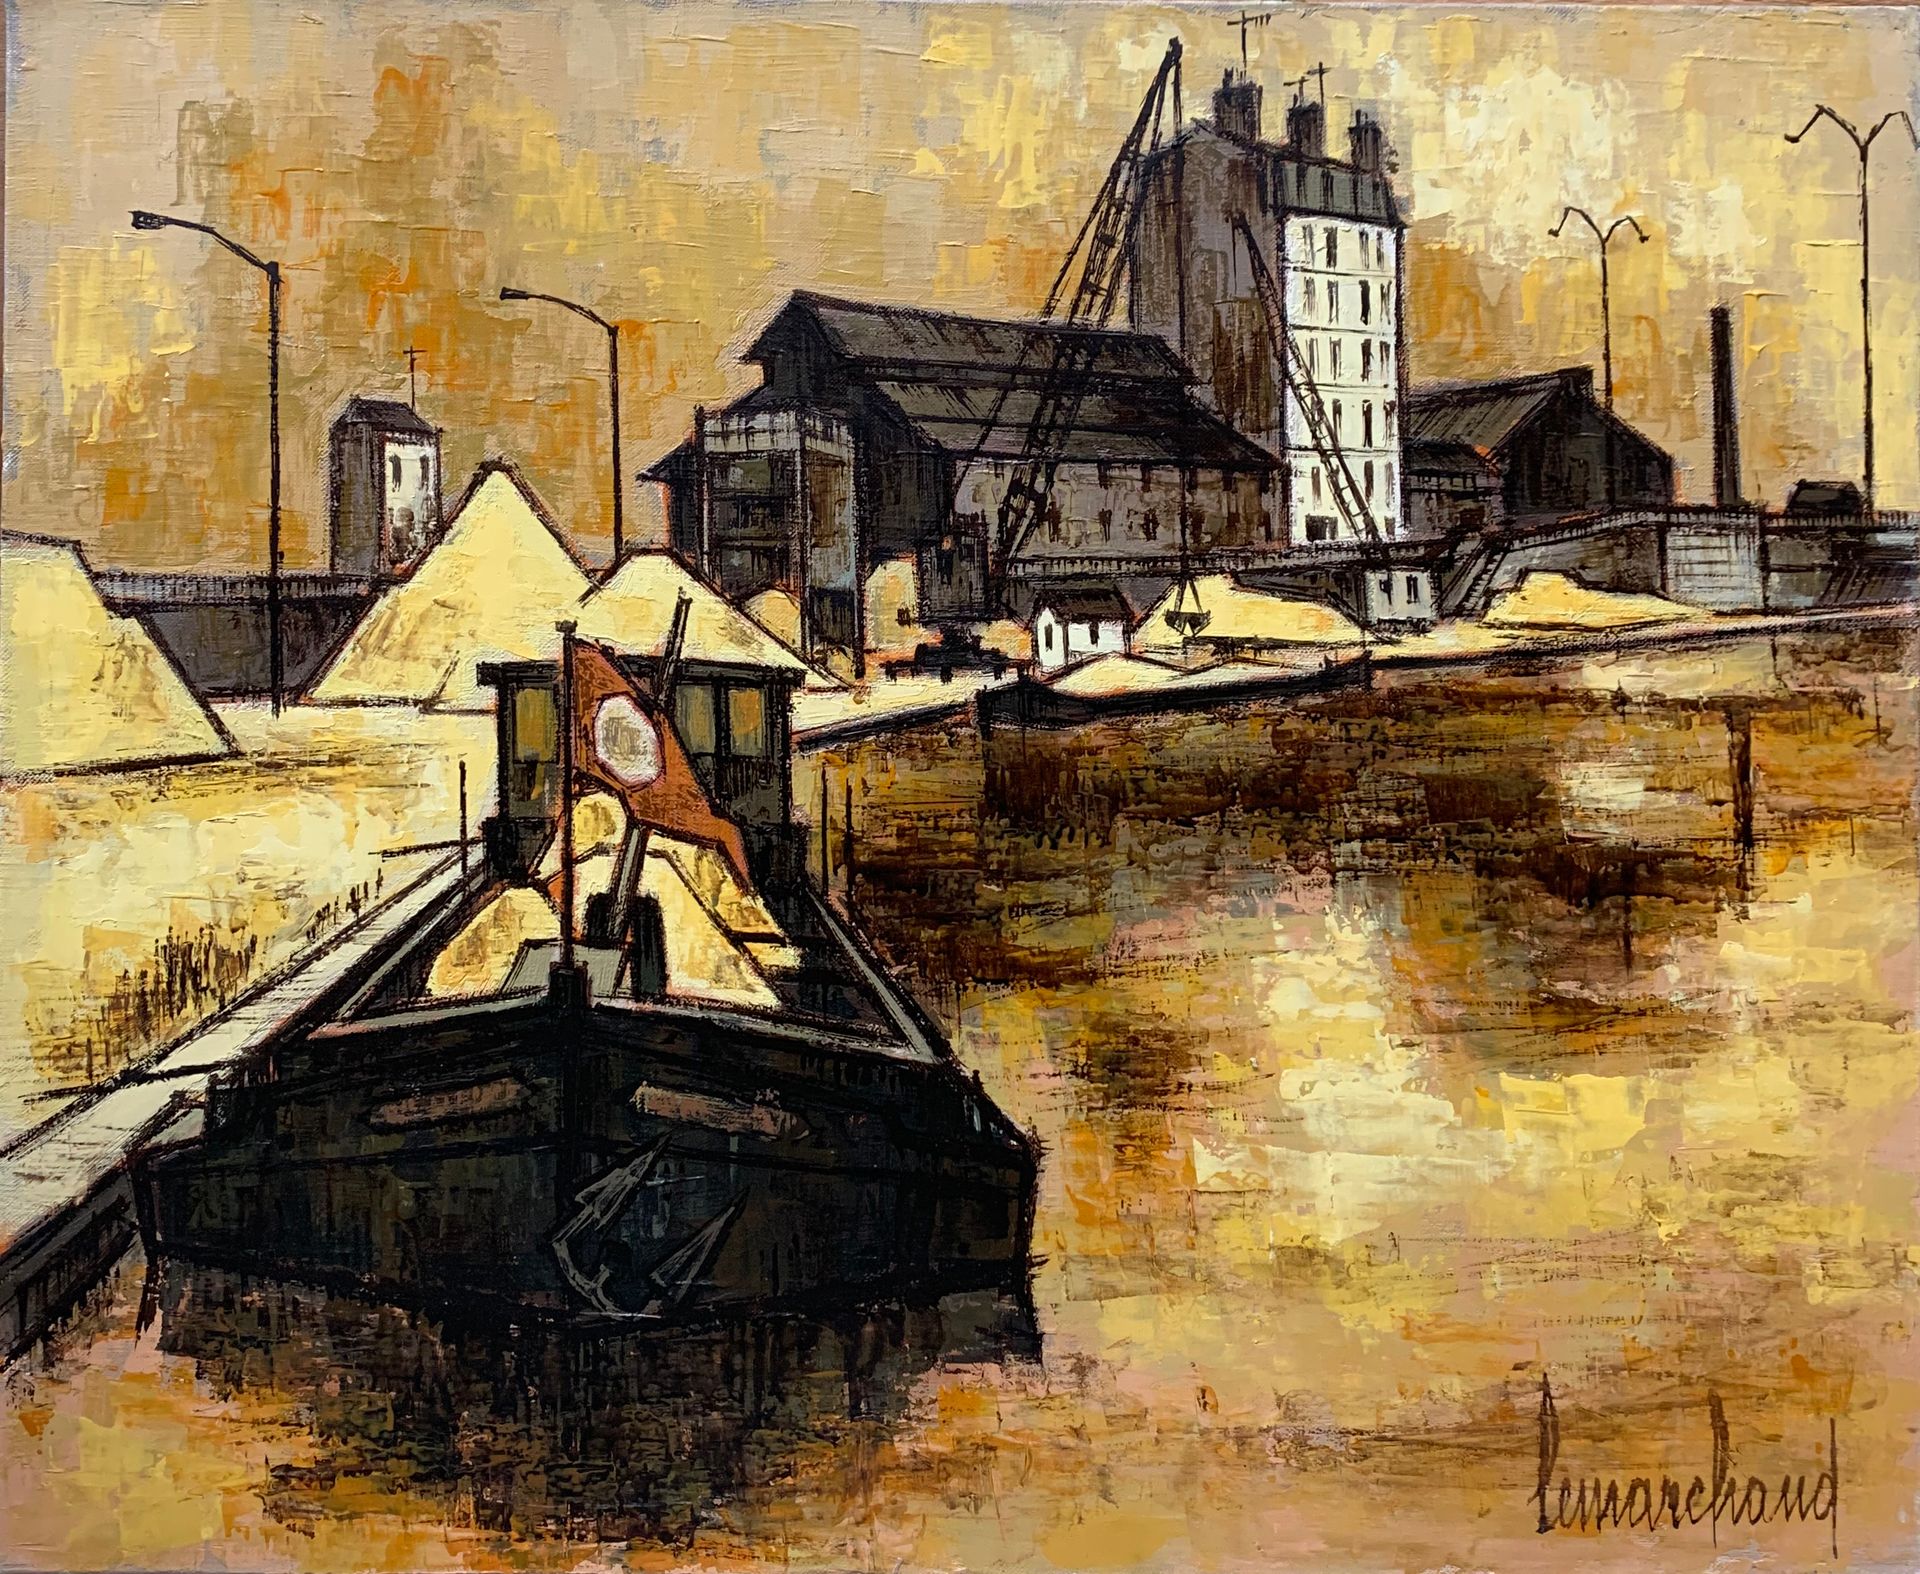 Null 皮埃尔-莱马赫德 (1906-1970)

圣丹尼斯运河上的港口

布面油画，右下角有签名，框架背面有标题

50 x 61厘米。